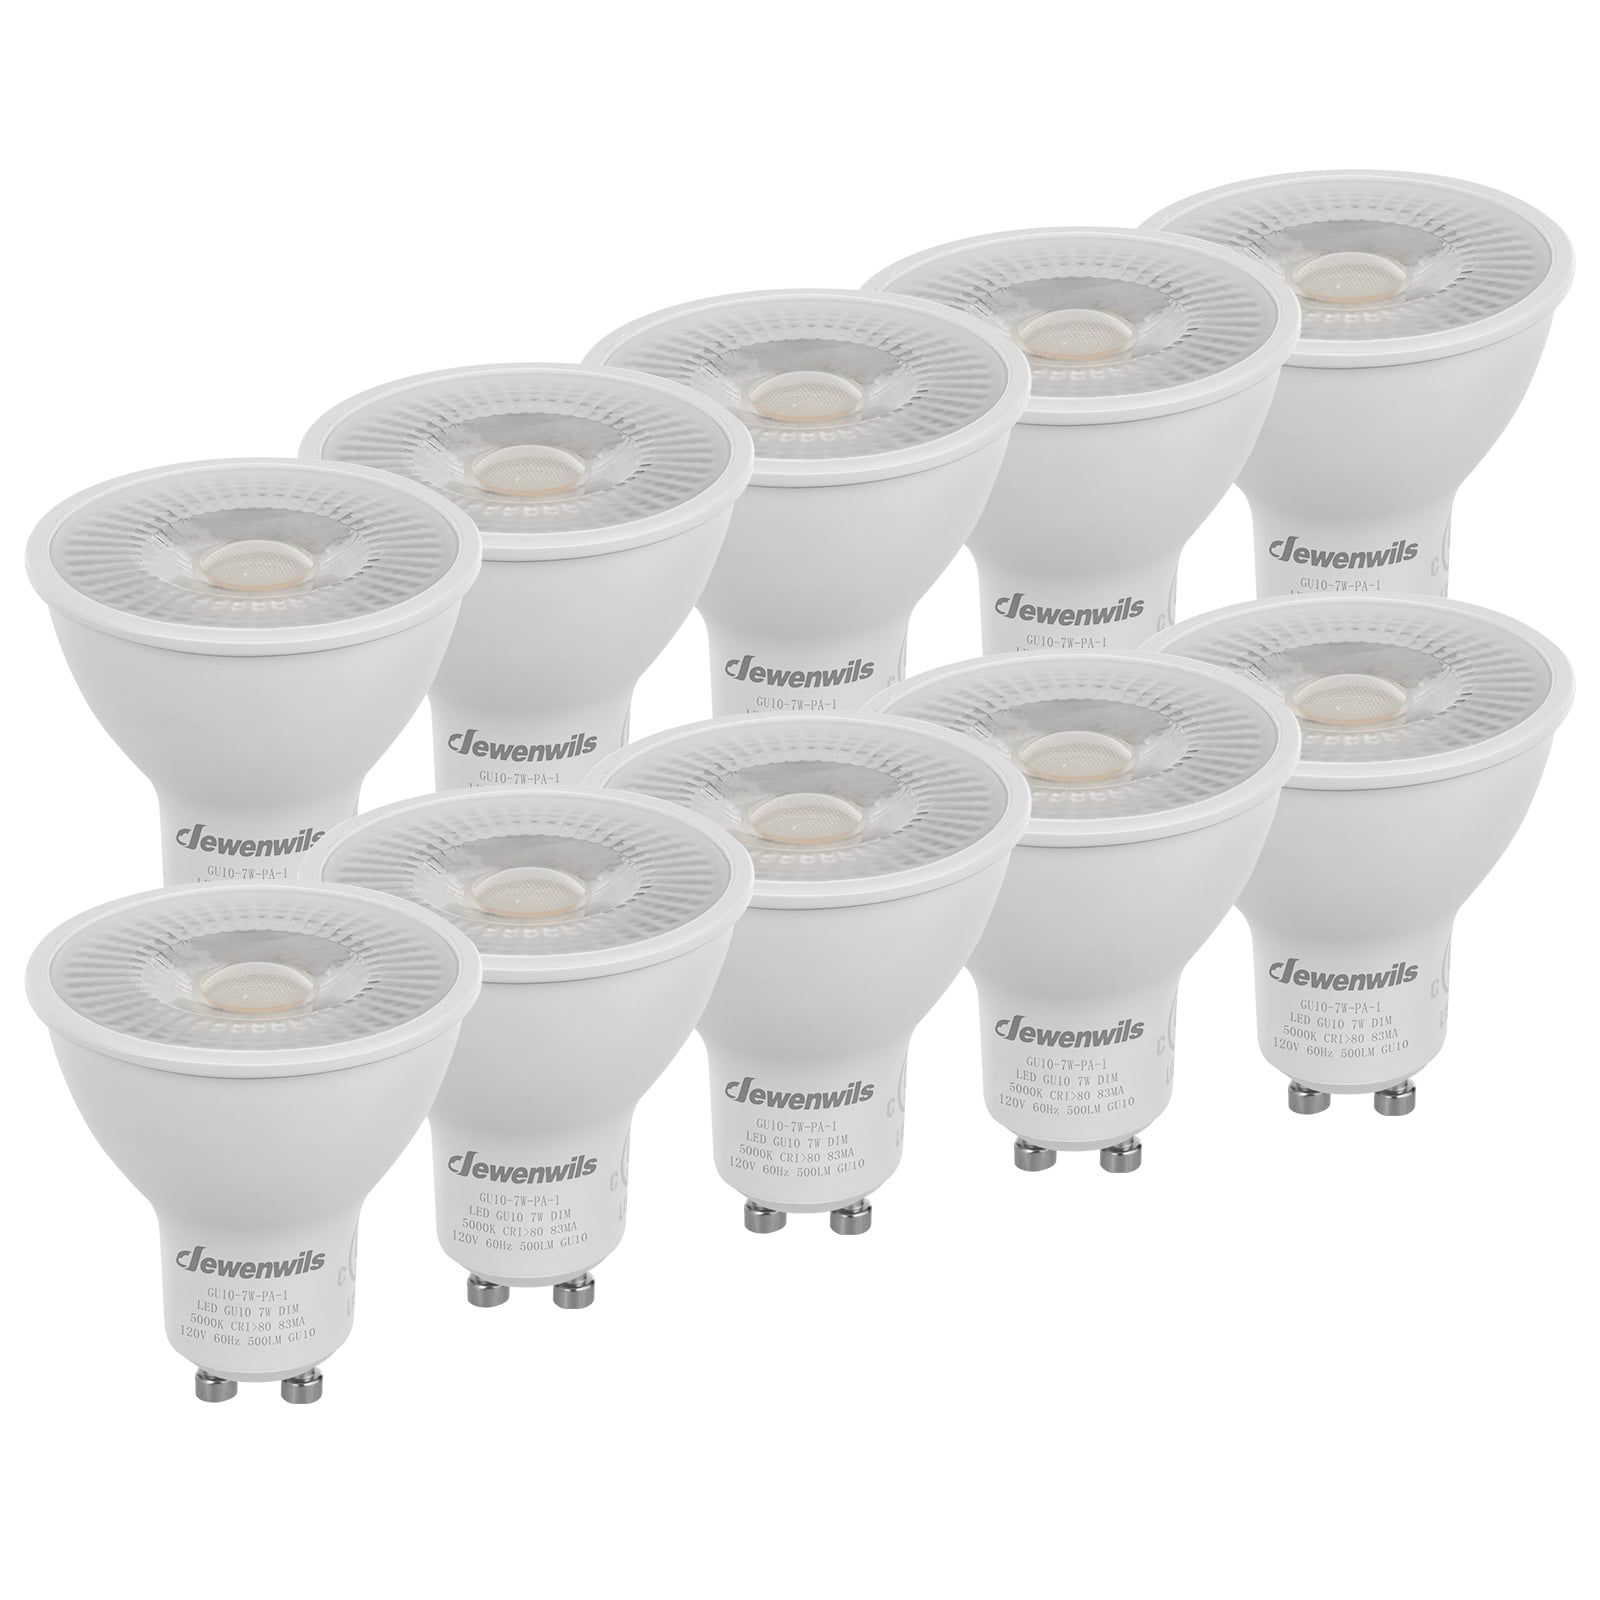 DEWENWILS LED GU10 Track Lighting Bulbs,500LM,3000K Warm White,7W Halogen Equivalent),UL Listed,10-Pack - Walmart.com